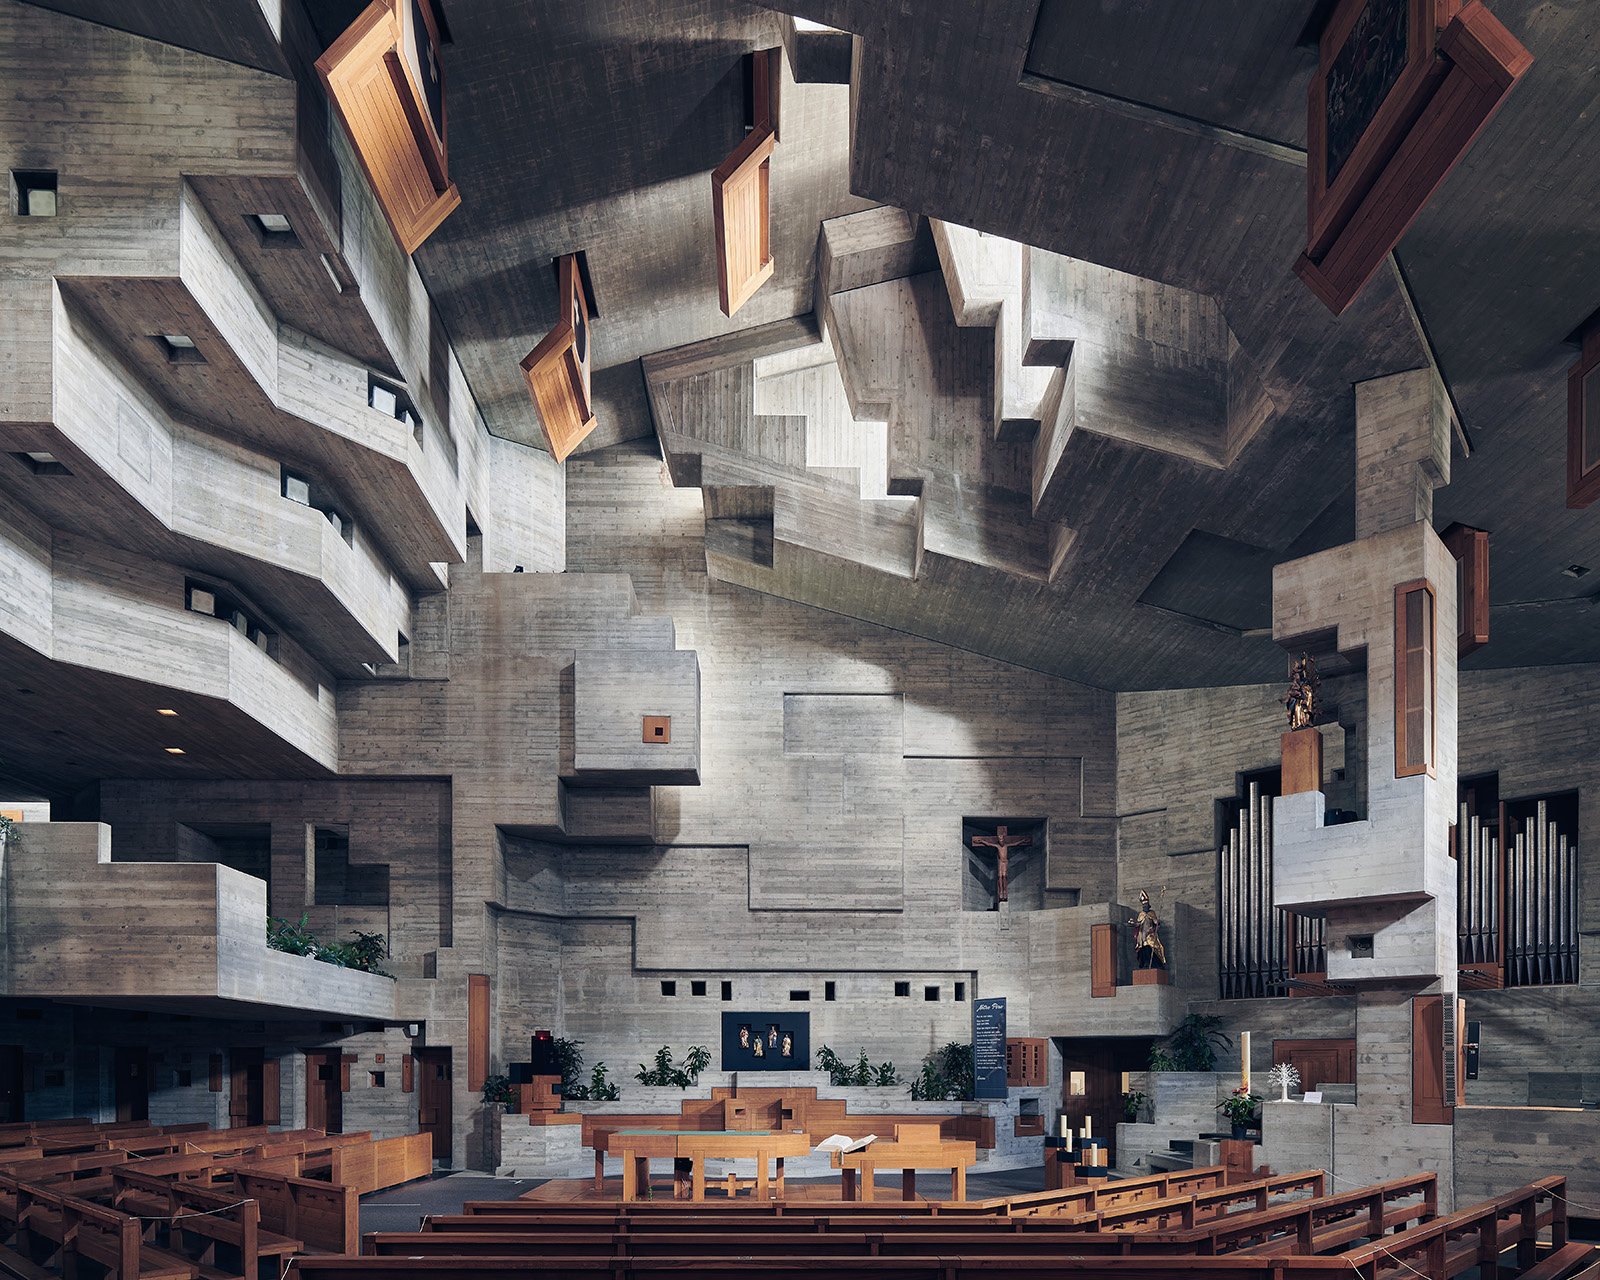 L’église Saint-Nicolas - Heremence, Switzerland - Walter Maria Förderer, 1968-1971